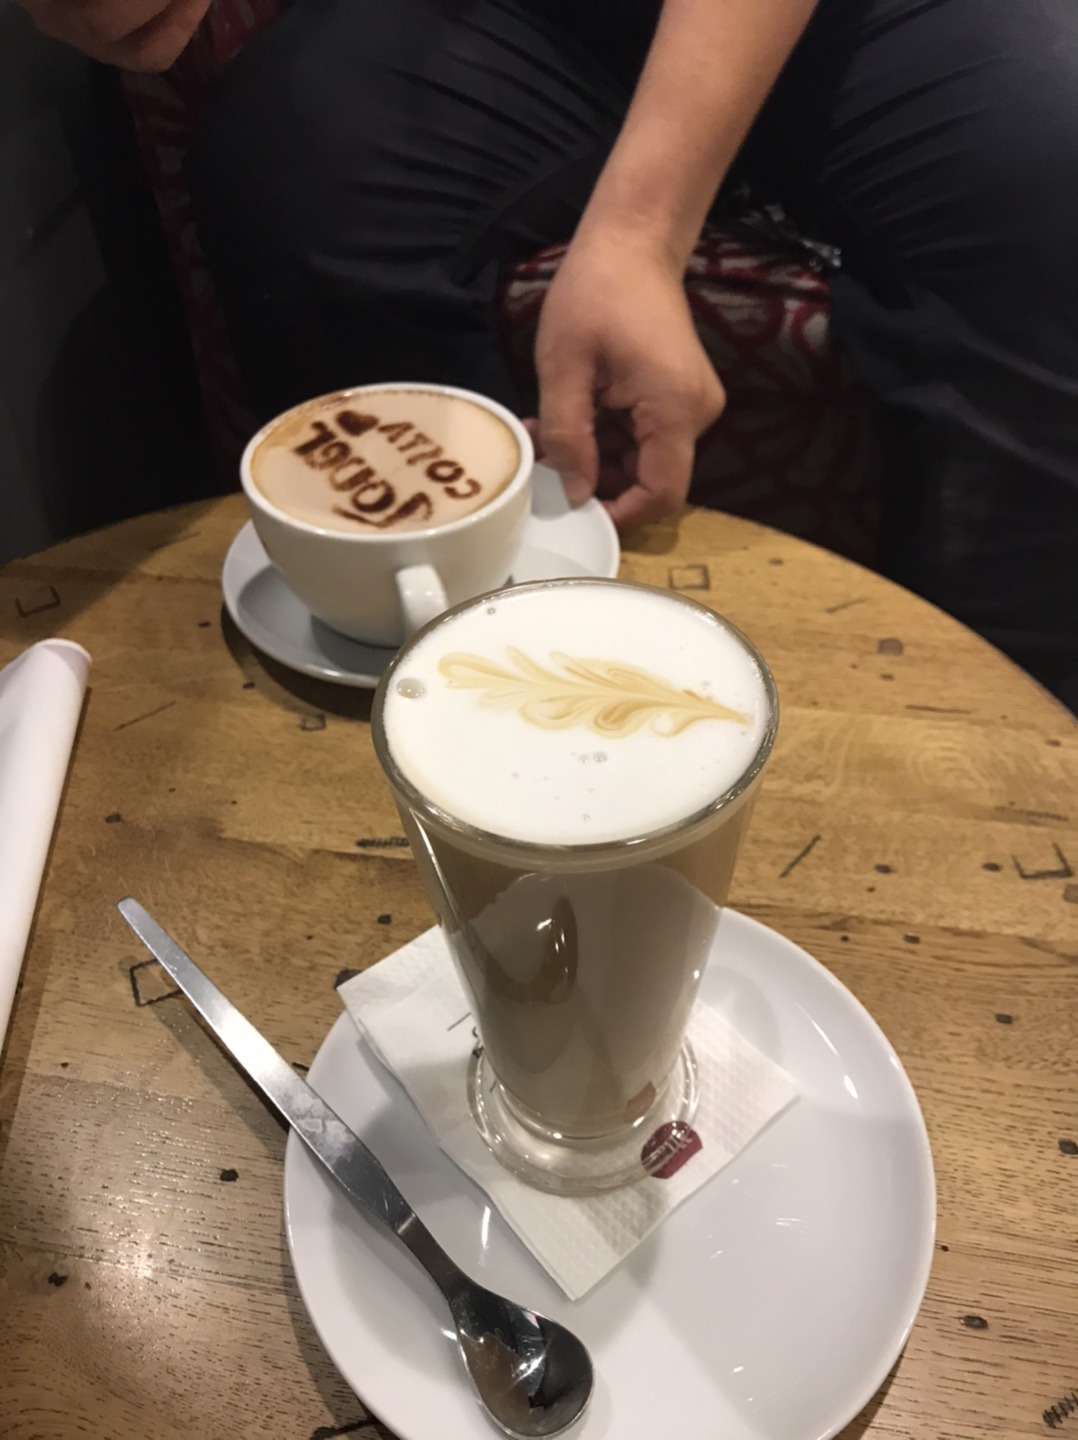 😍😍😍❤️❤️ @ Costa Coffee - Bahrain